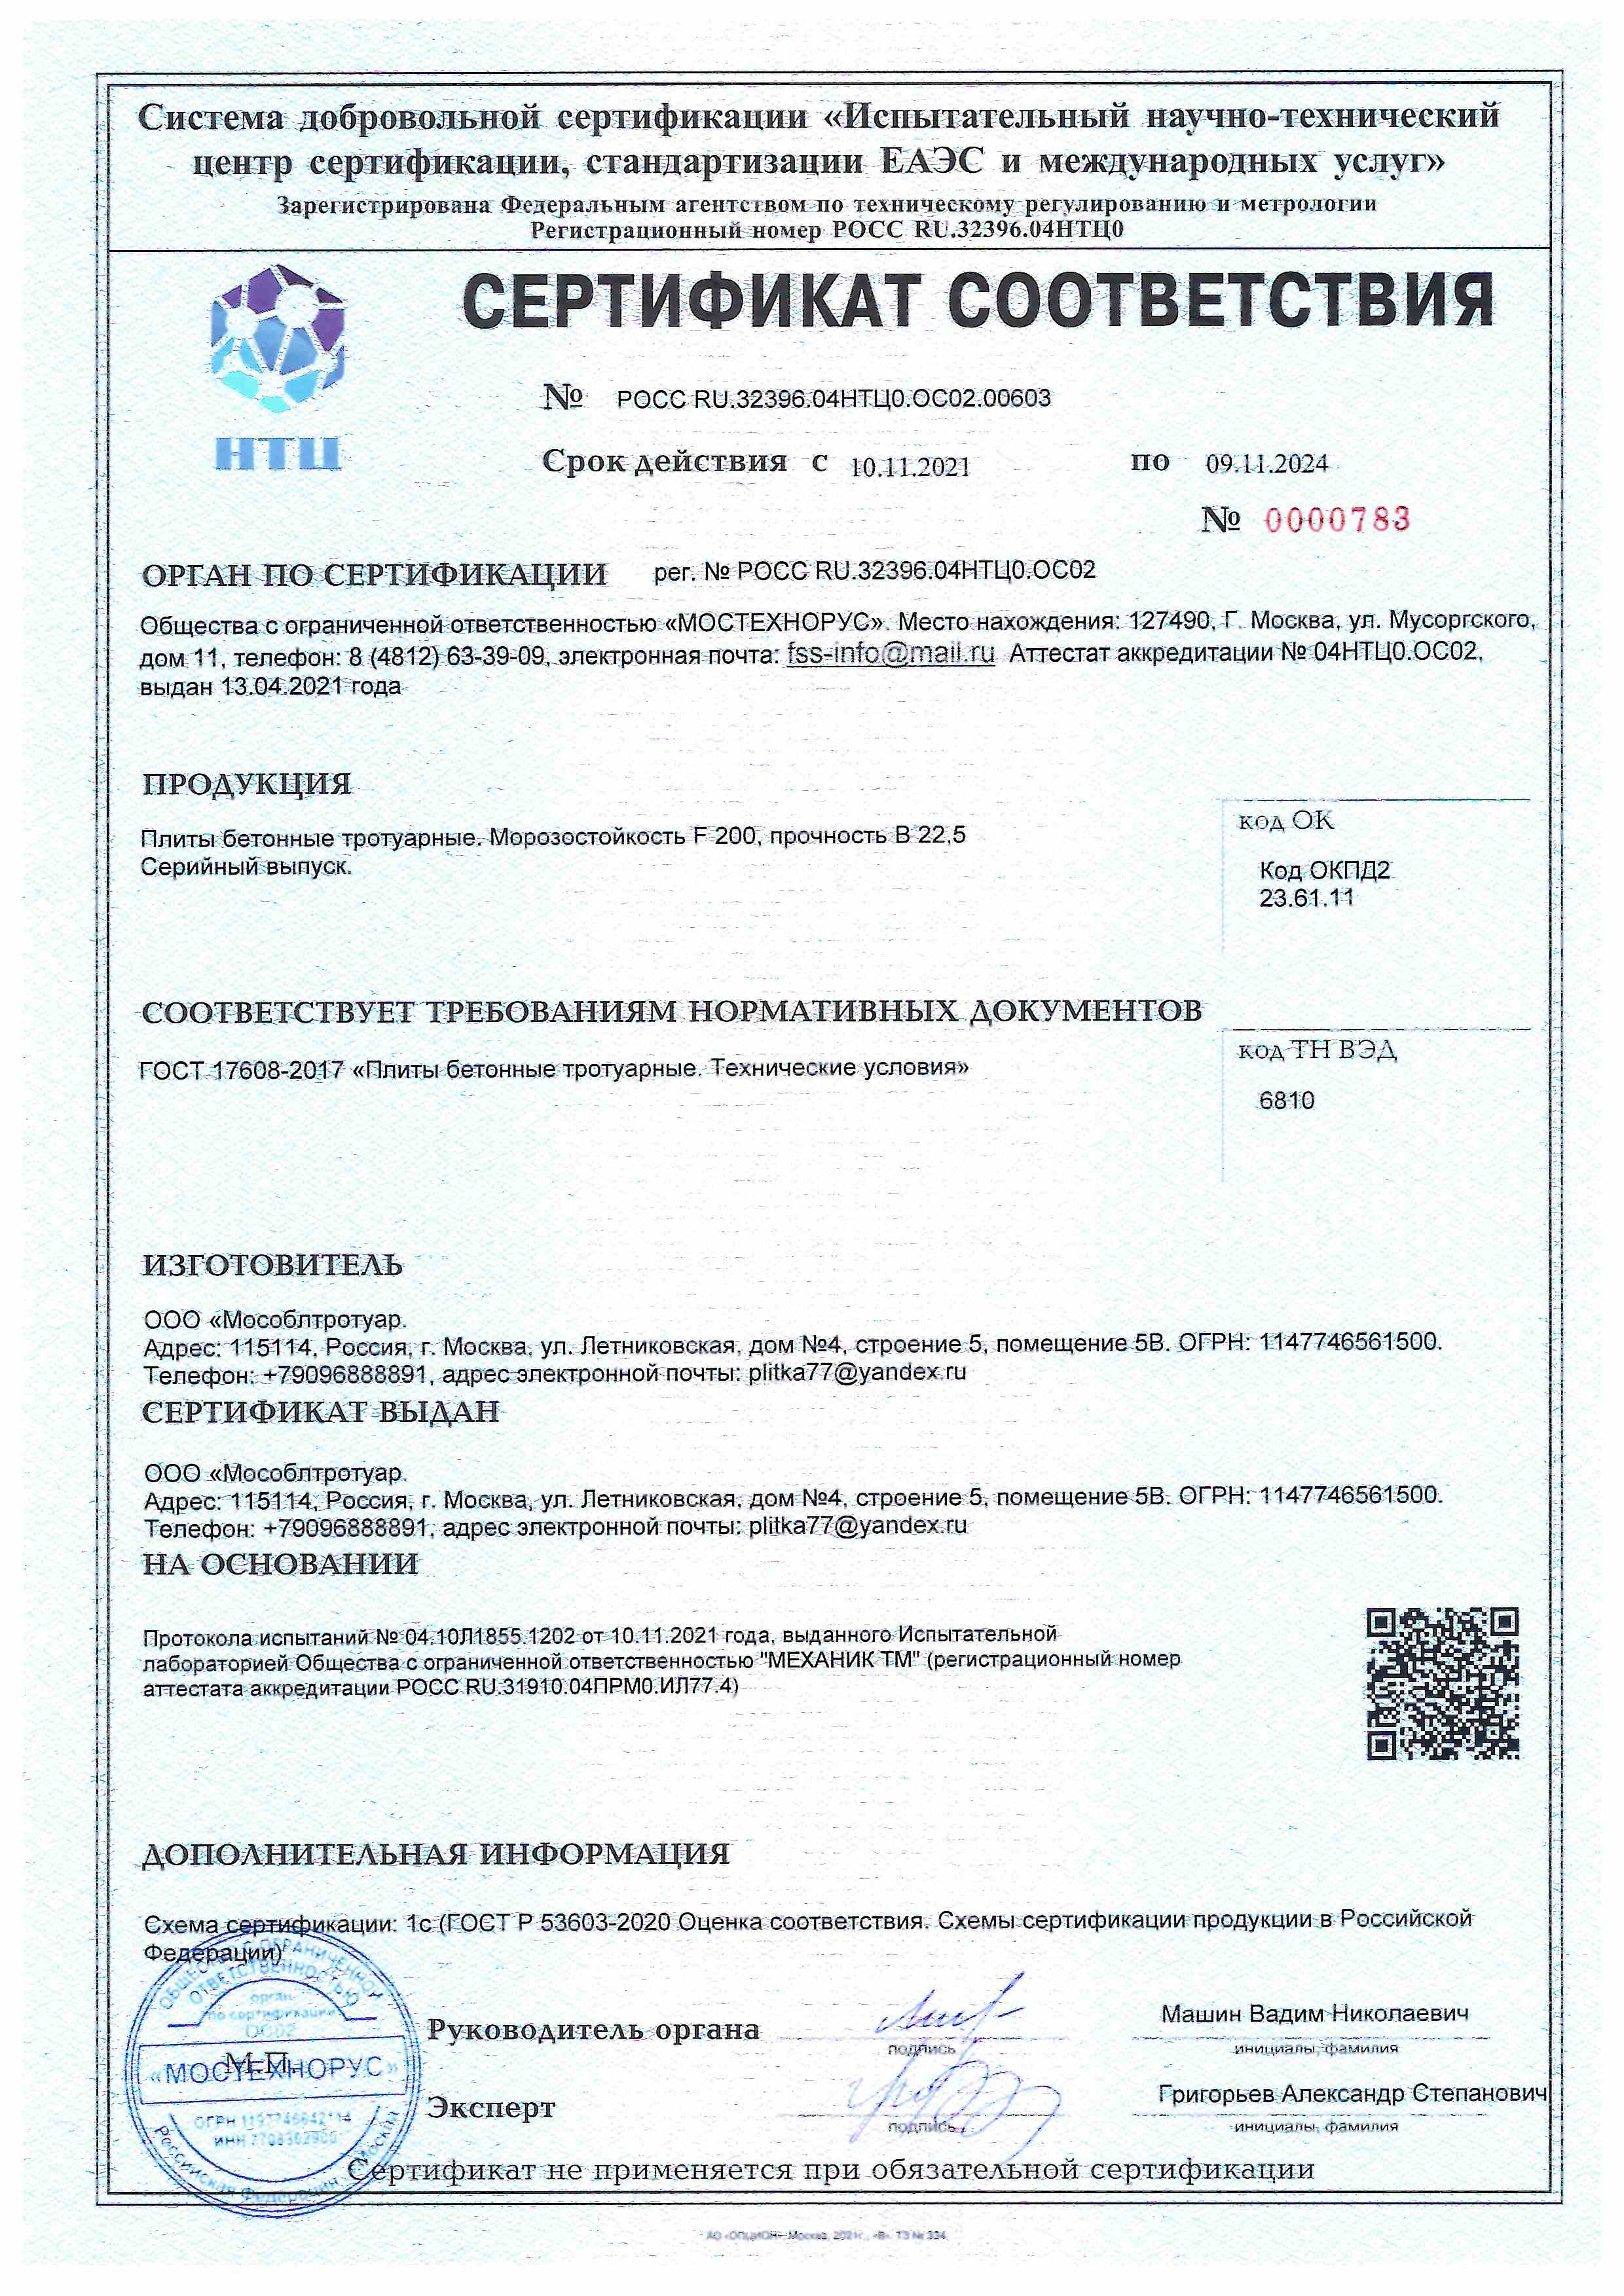 Сертификат соответствия Плиты тротуарные "МосОблТротуар"